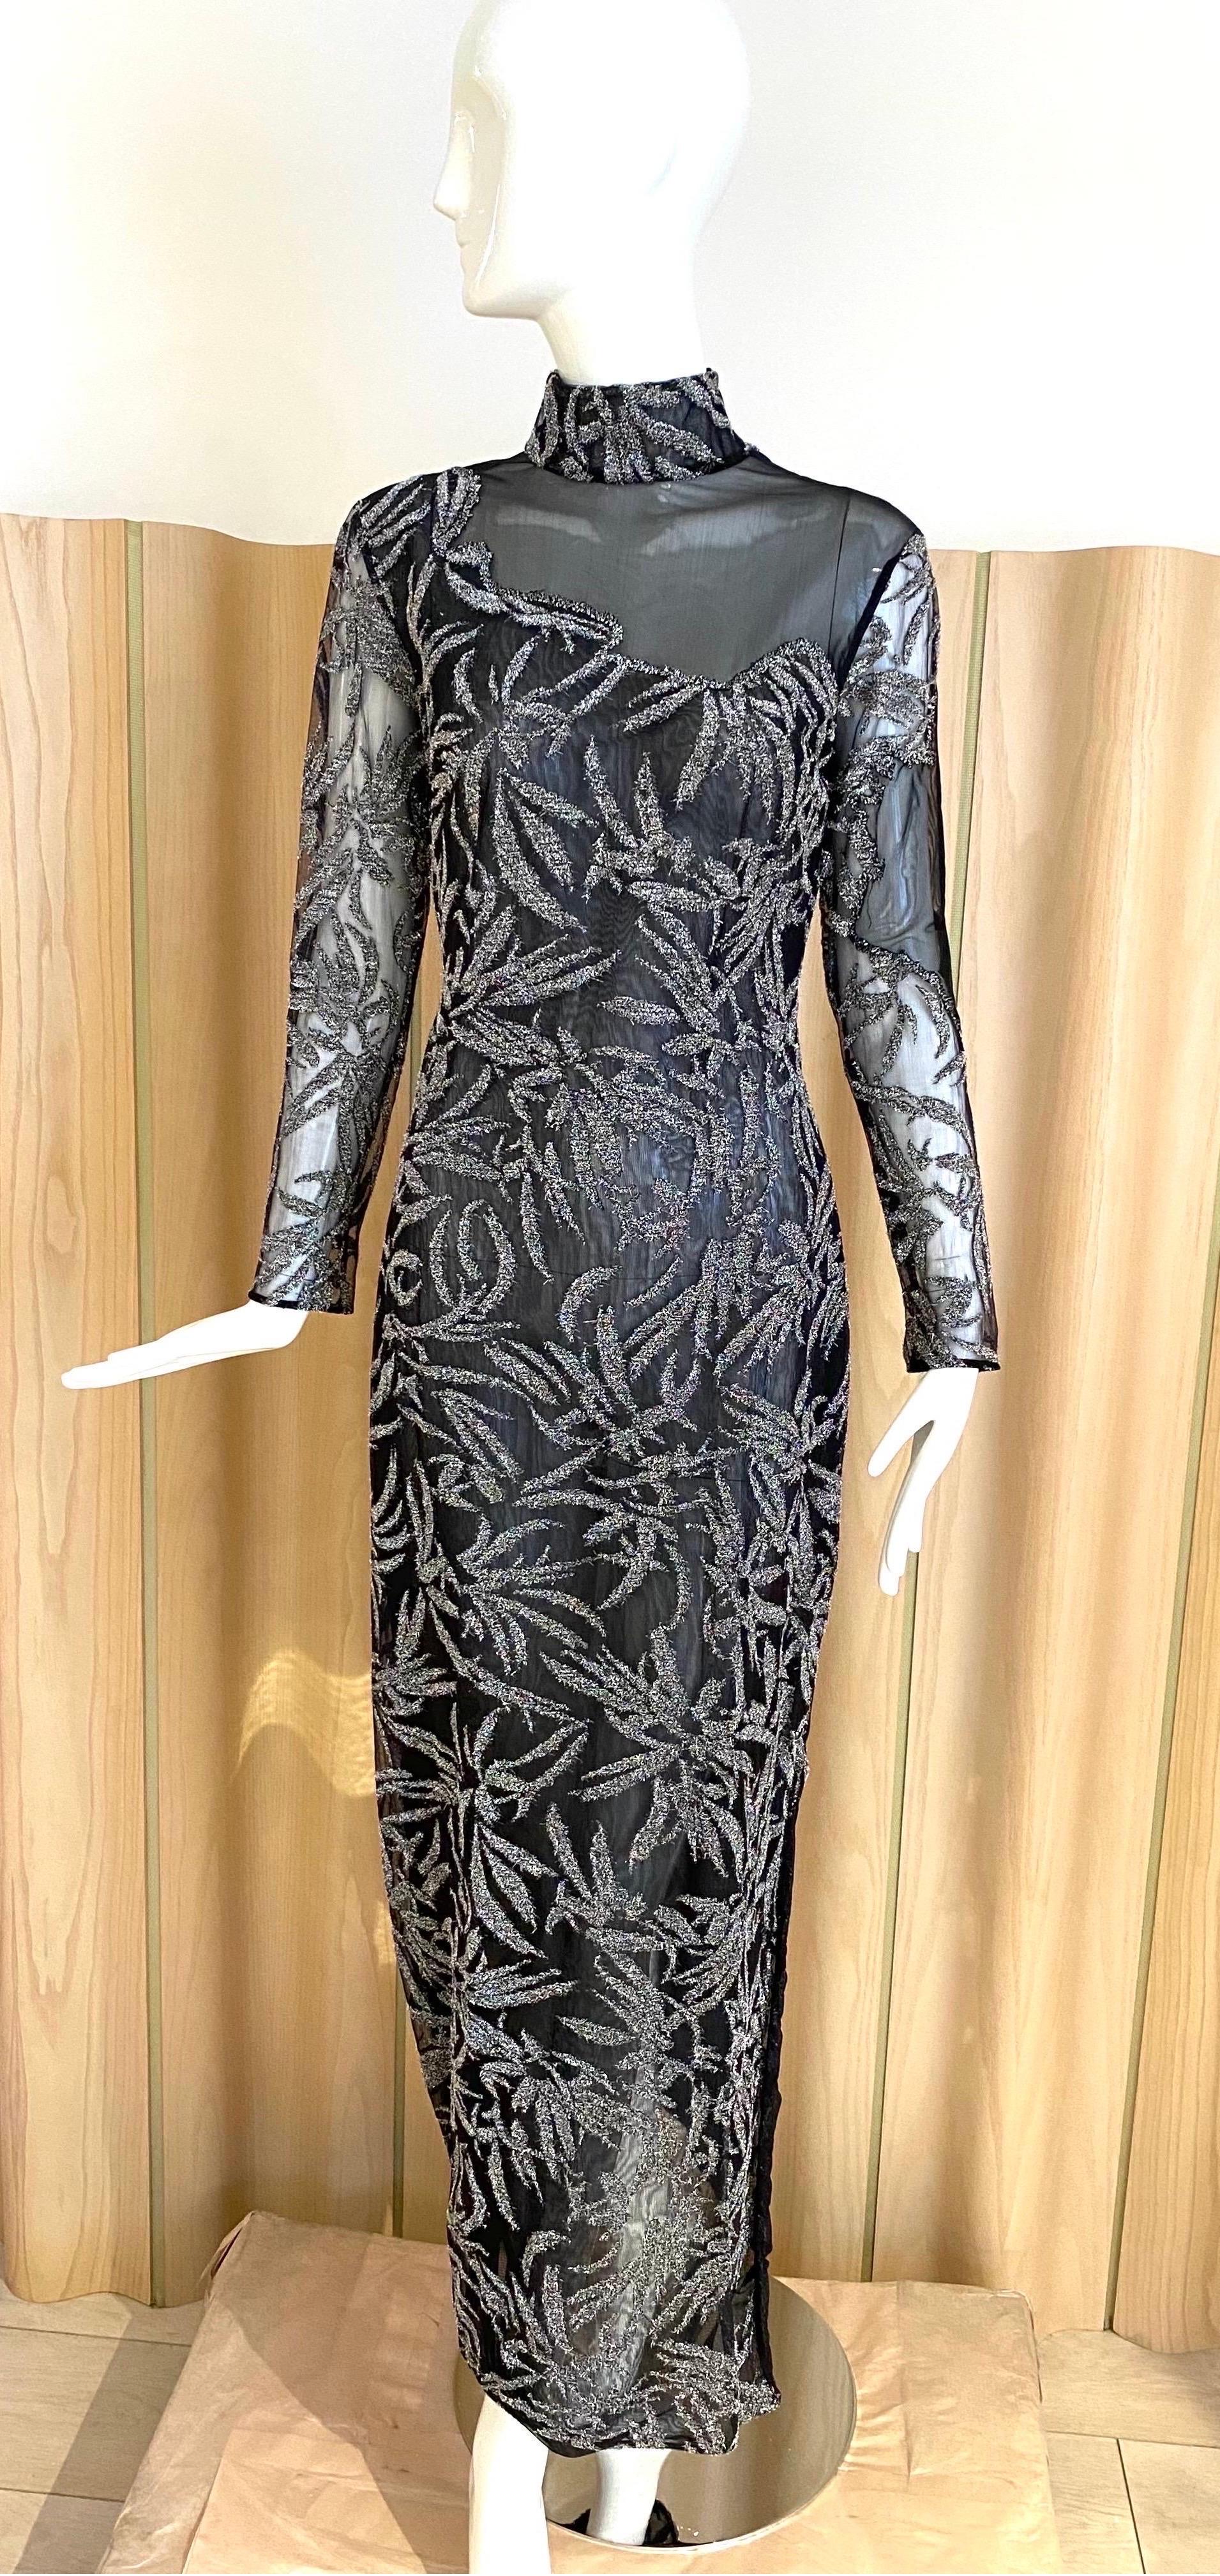 90s Gianfranco Ferre Sheer metallic grey long sleeve fitted cocktail dress.
Size: 4/6 see measurement:
Bust: 36” / Waist: 30”/ Hip : 38”/ Shoulder 15”. Dress length: 57”/ Sleeve length: 17”/ Slit :20”